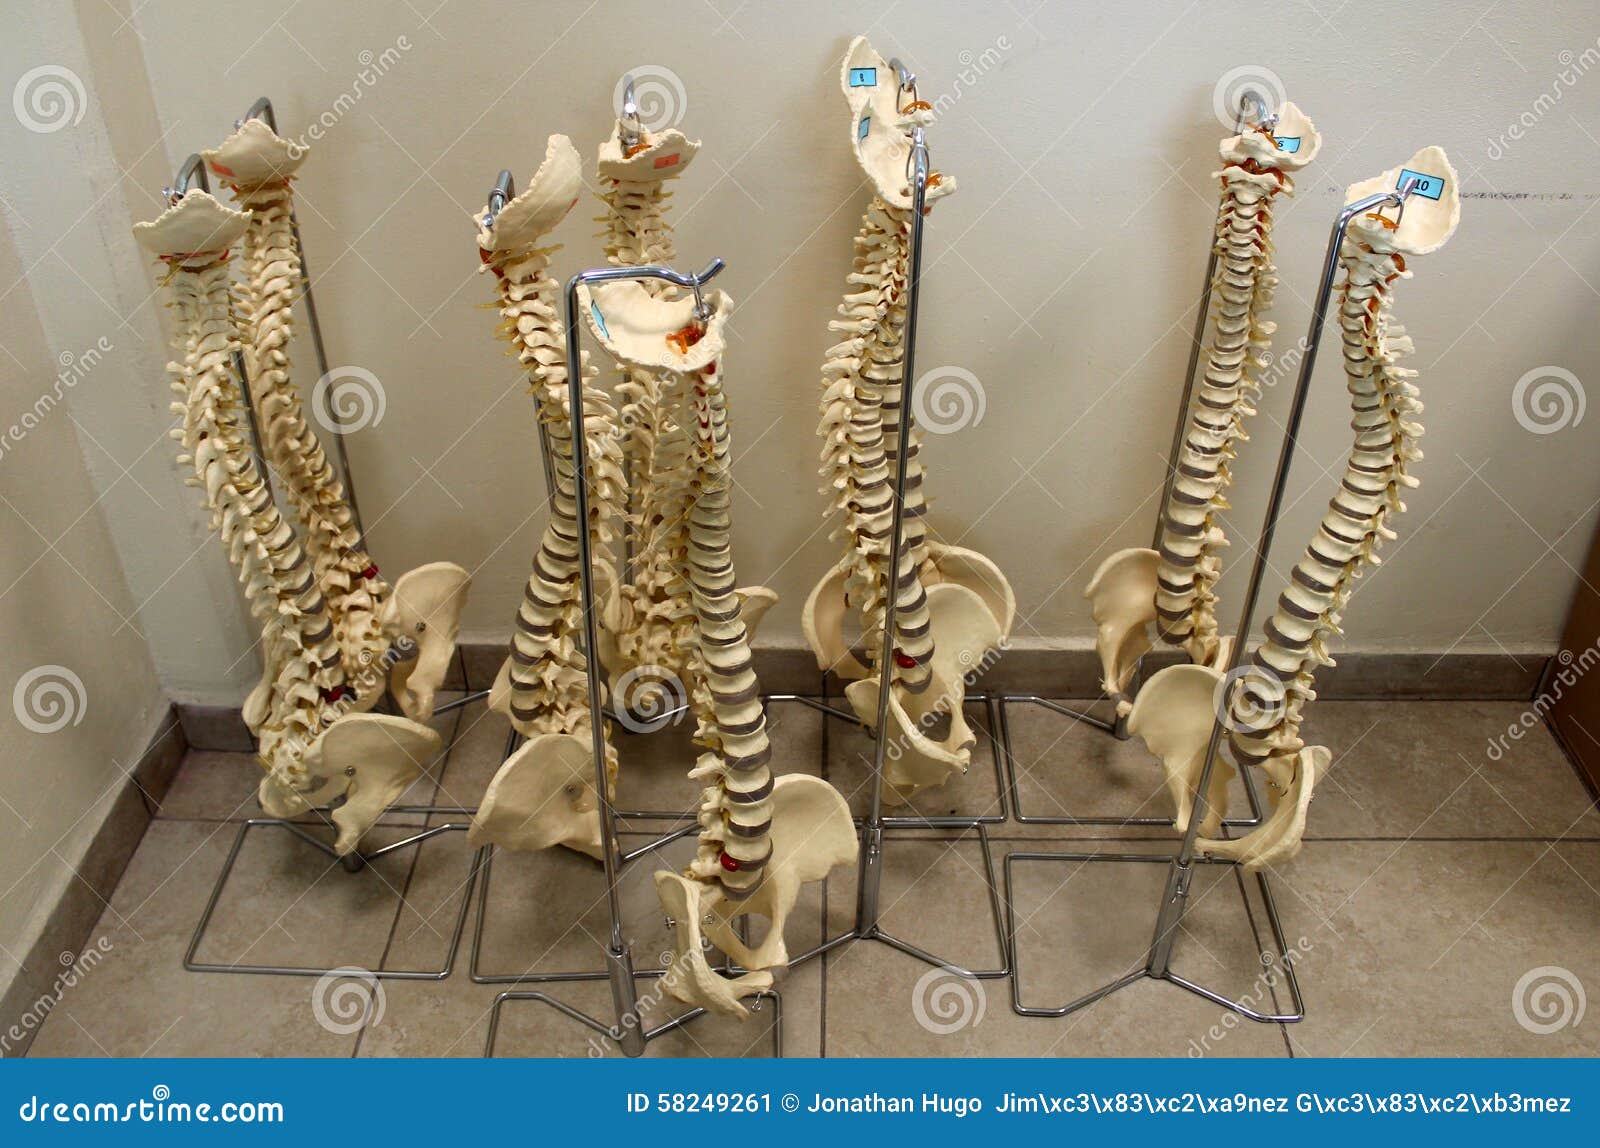 chiropractic test plastic vertebral columns